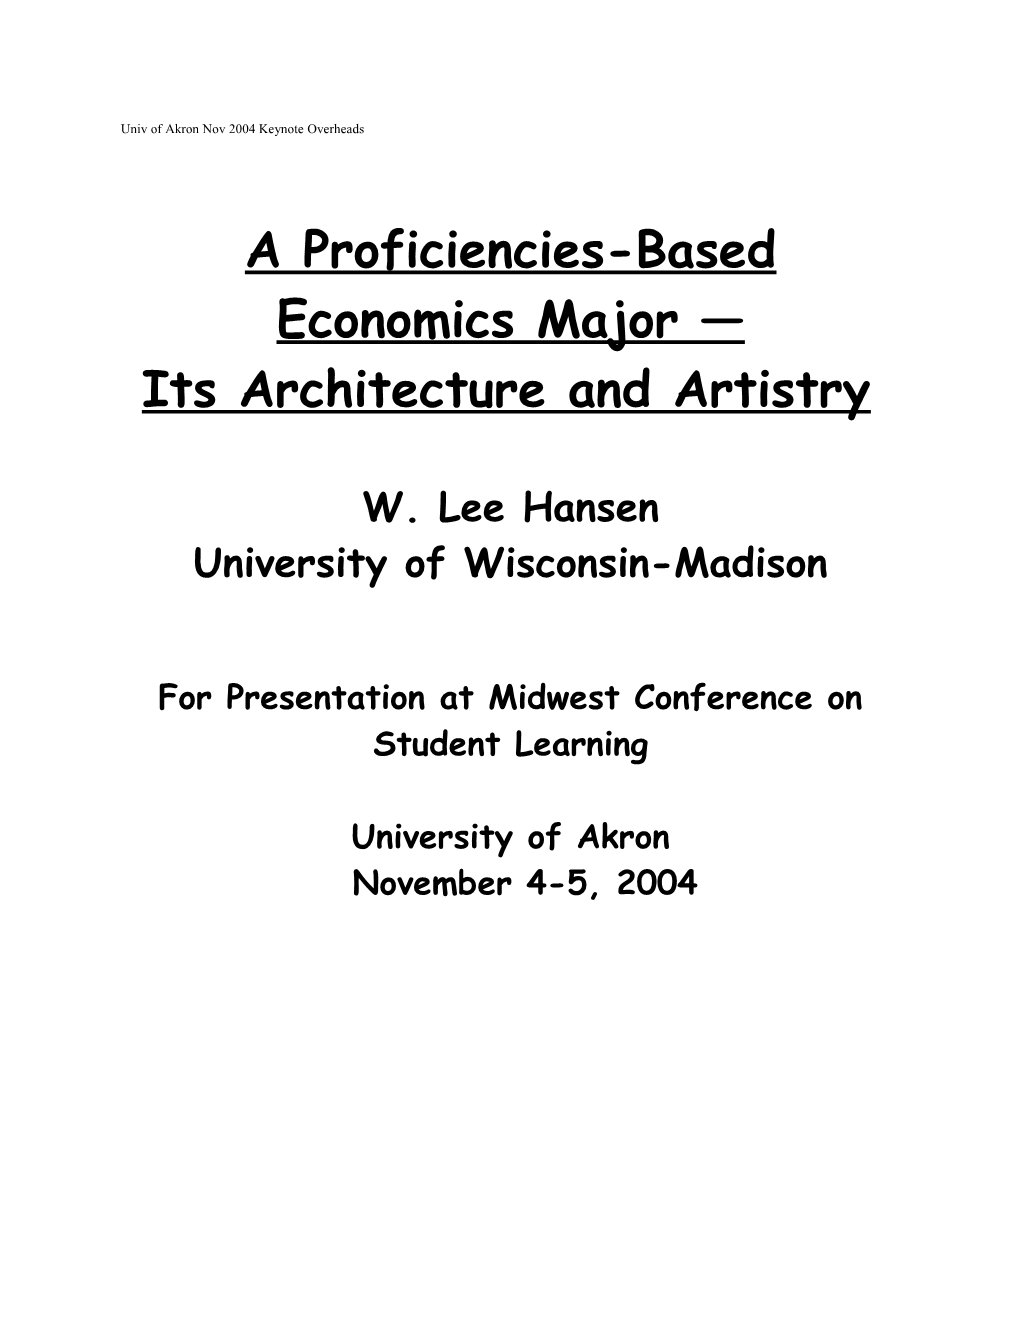 A Proficiencies-Based Economics Major